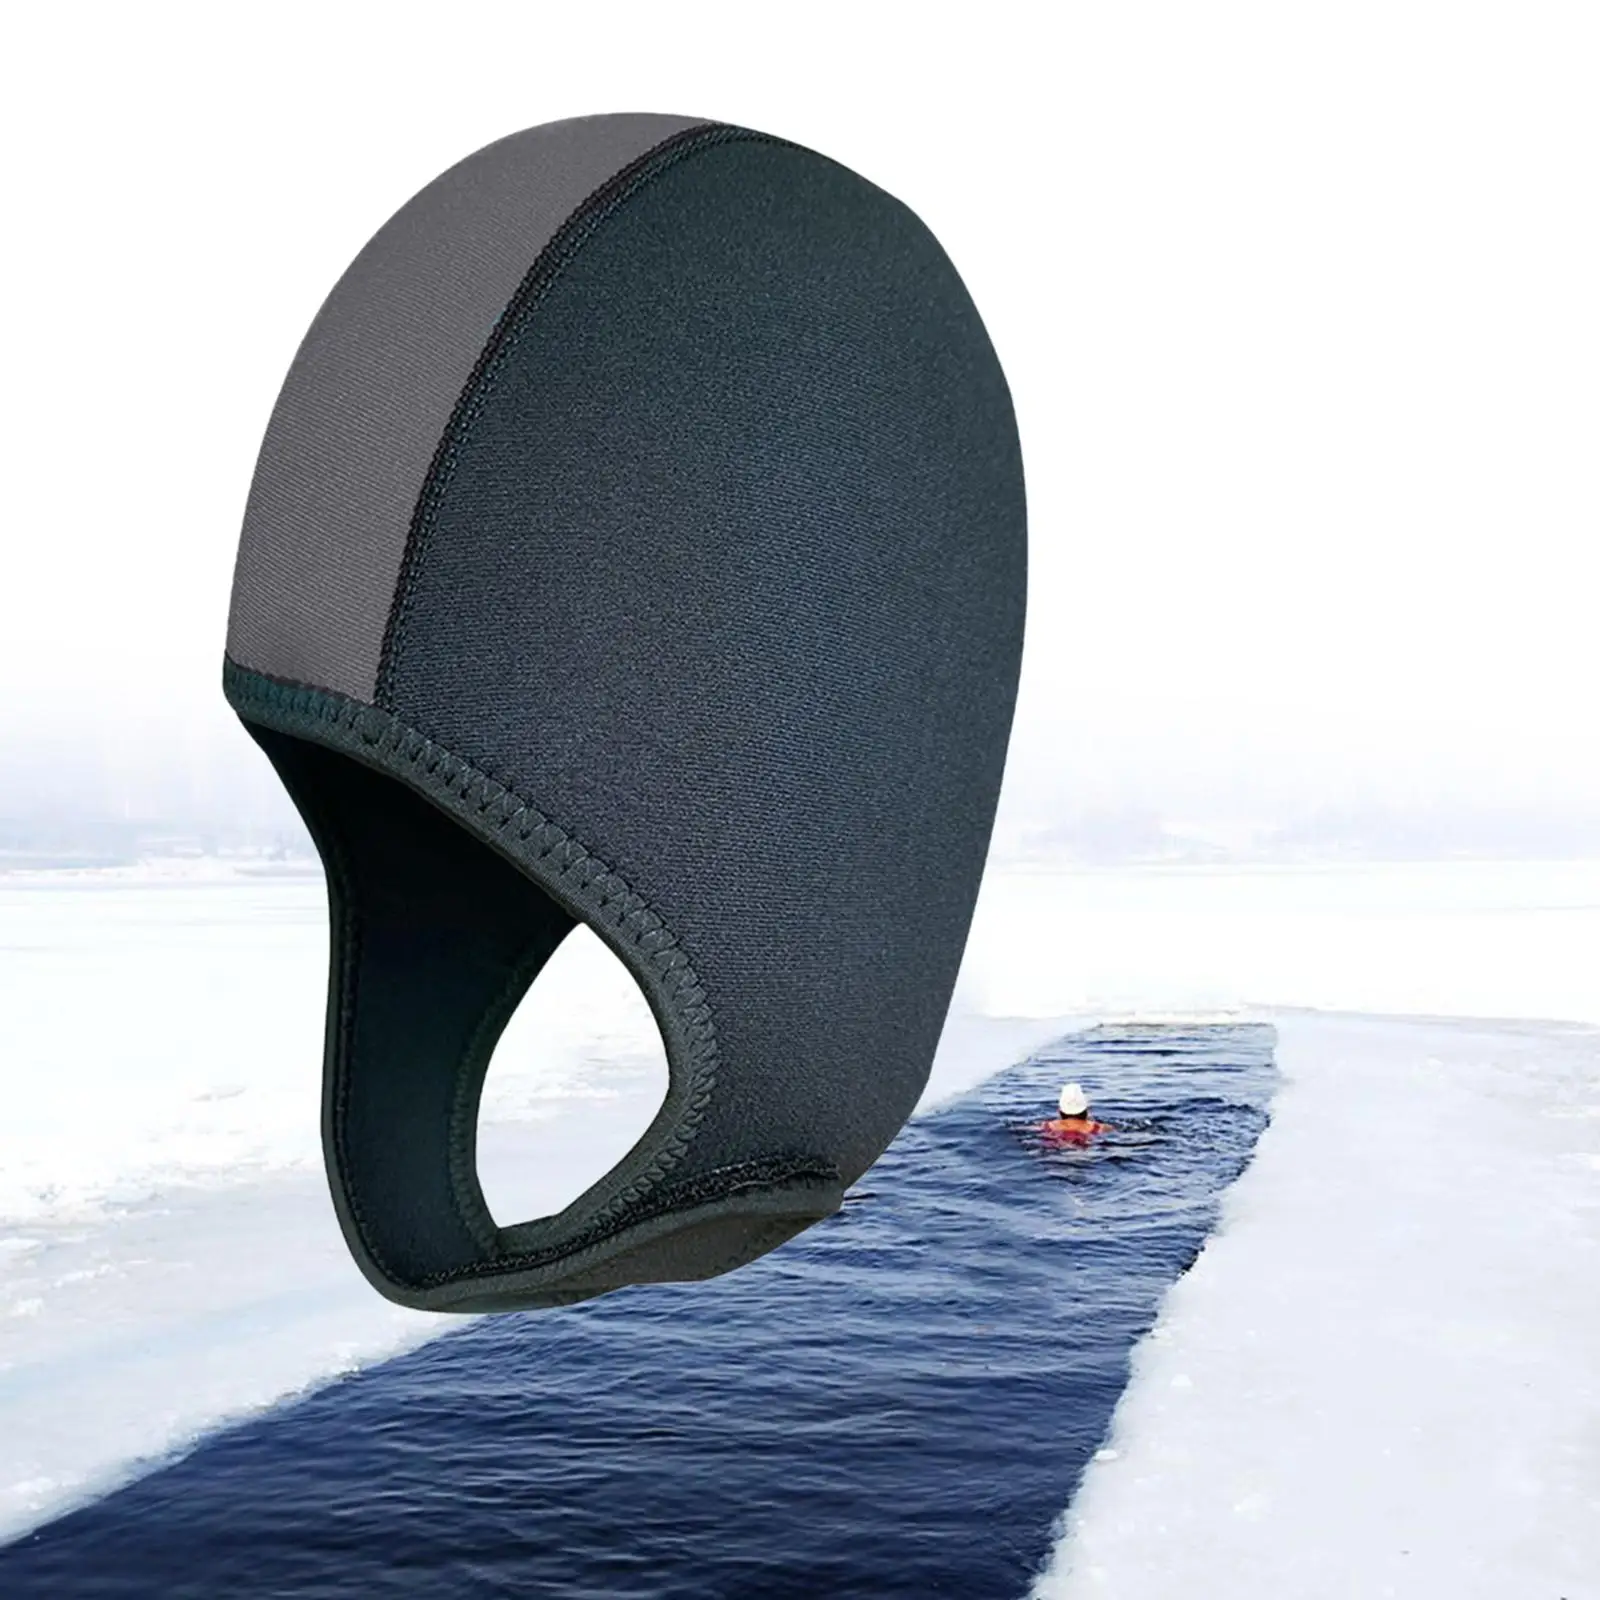 Flexible 2.5mm Neoprene Scuba Diving Hood Swimming Hat Beanie Ear Protective Winter Warm Adjustable Wetsuit Hood for Kayaking